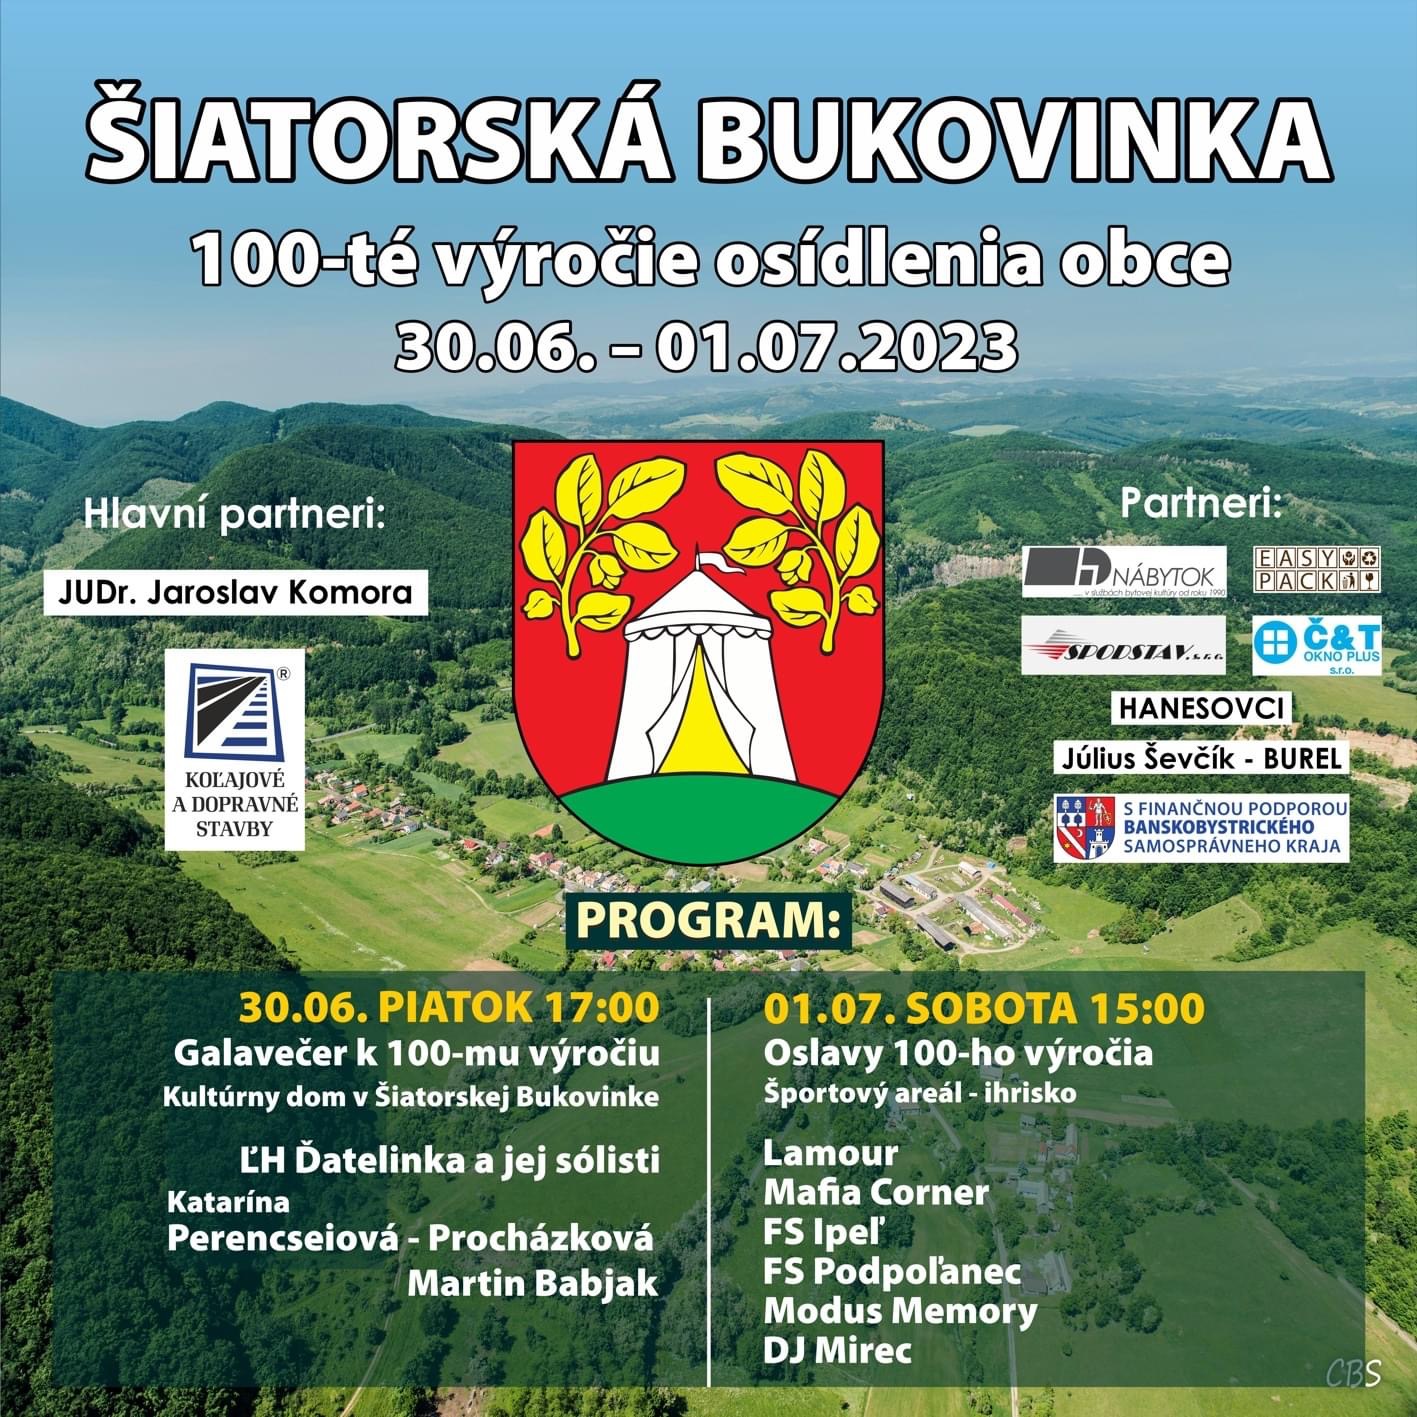 Šiatorská Bukovinka 2023 - 100-té výročie osídlenia obce